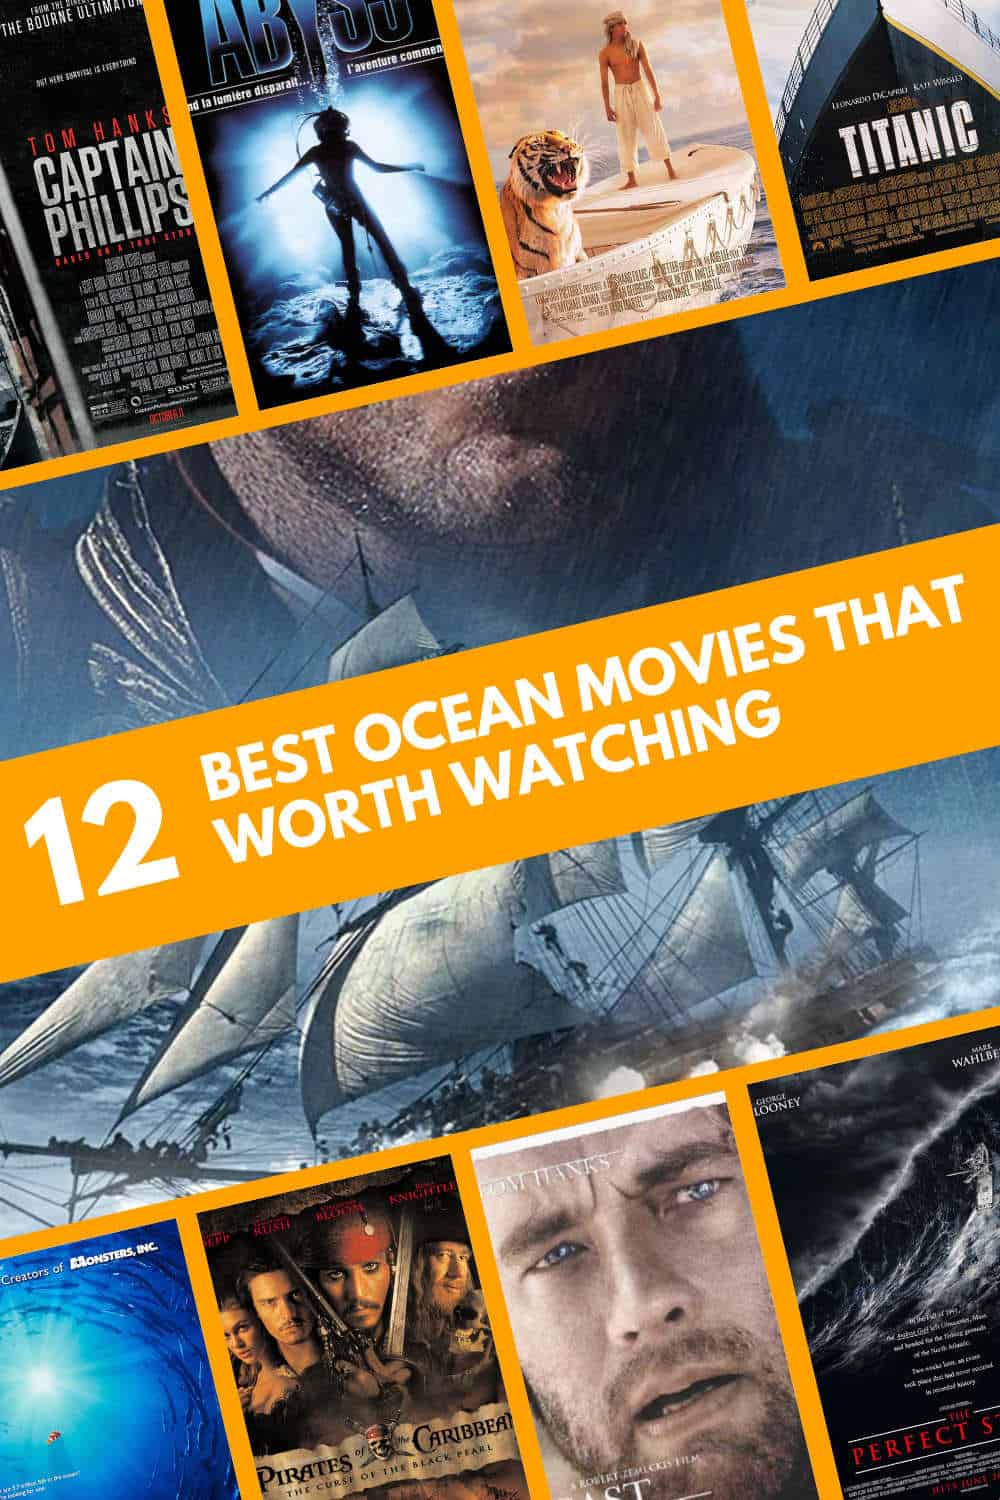 Ocean Movies that Worth Watching